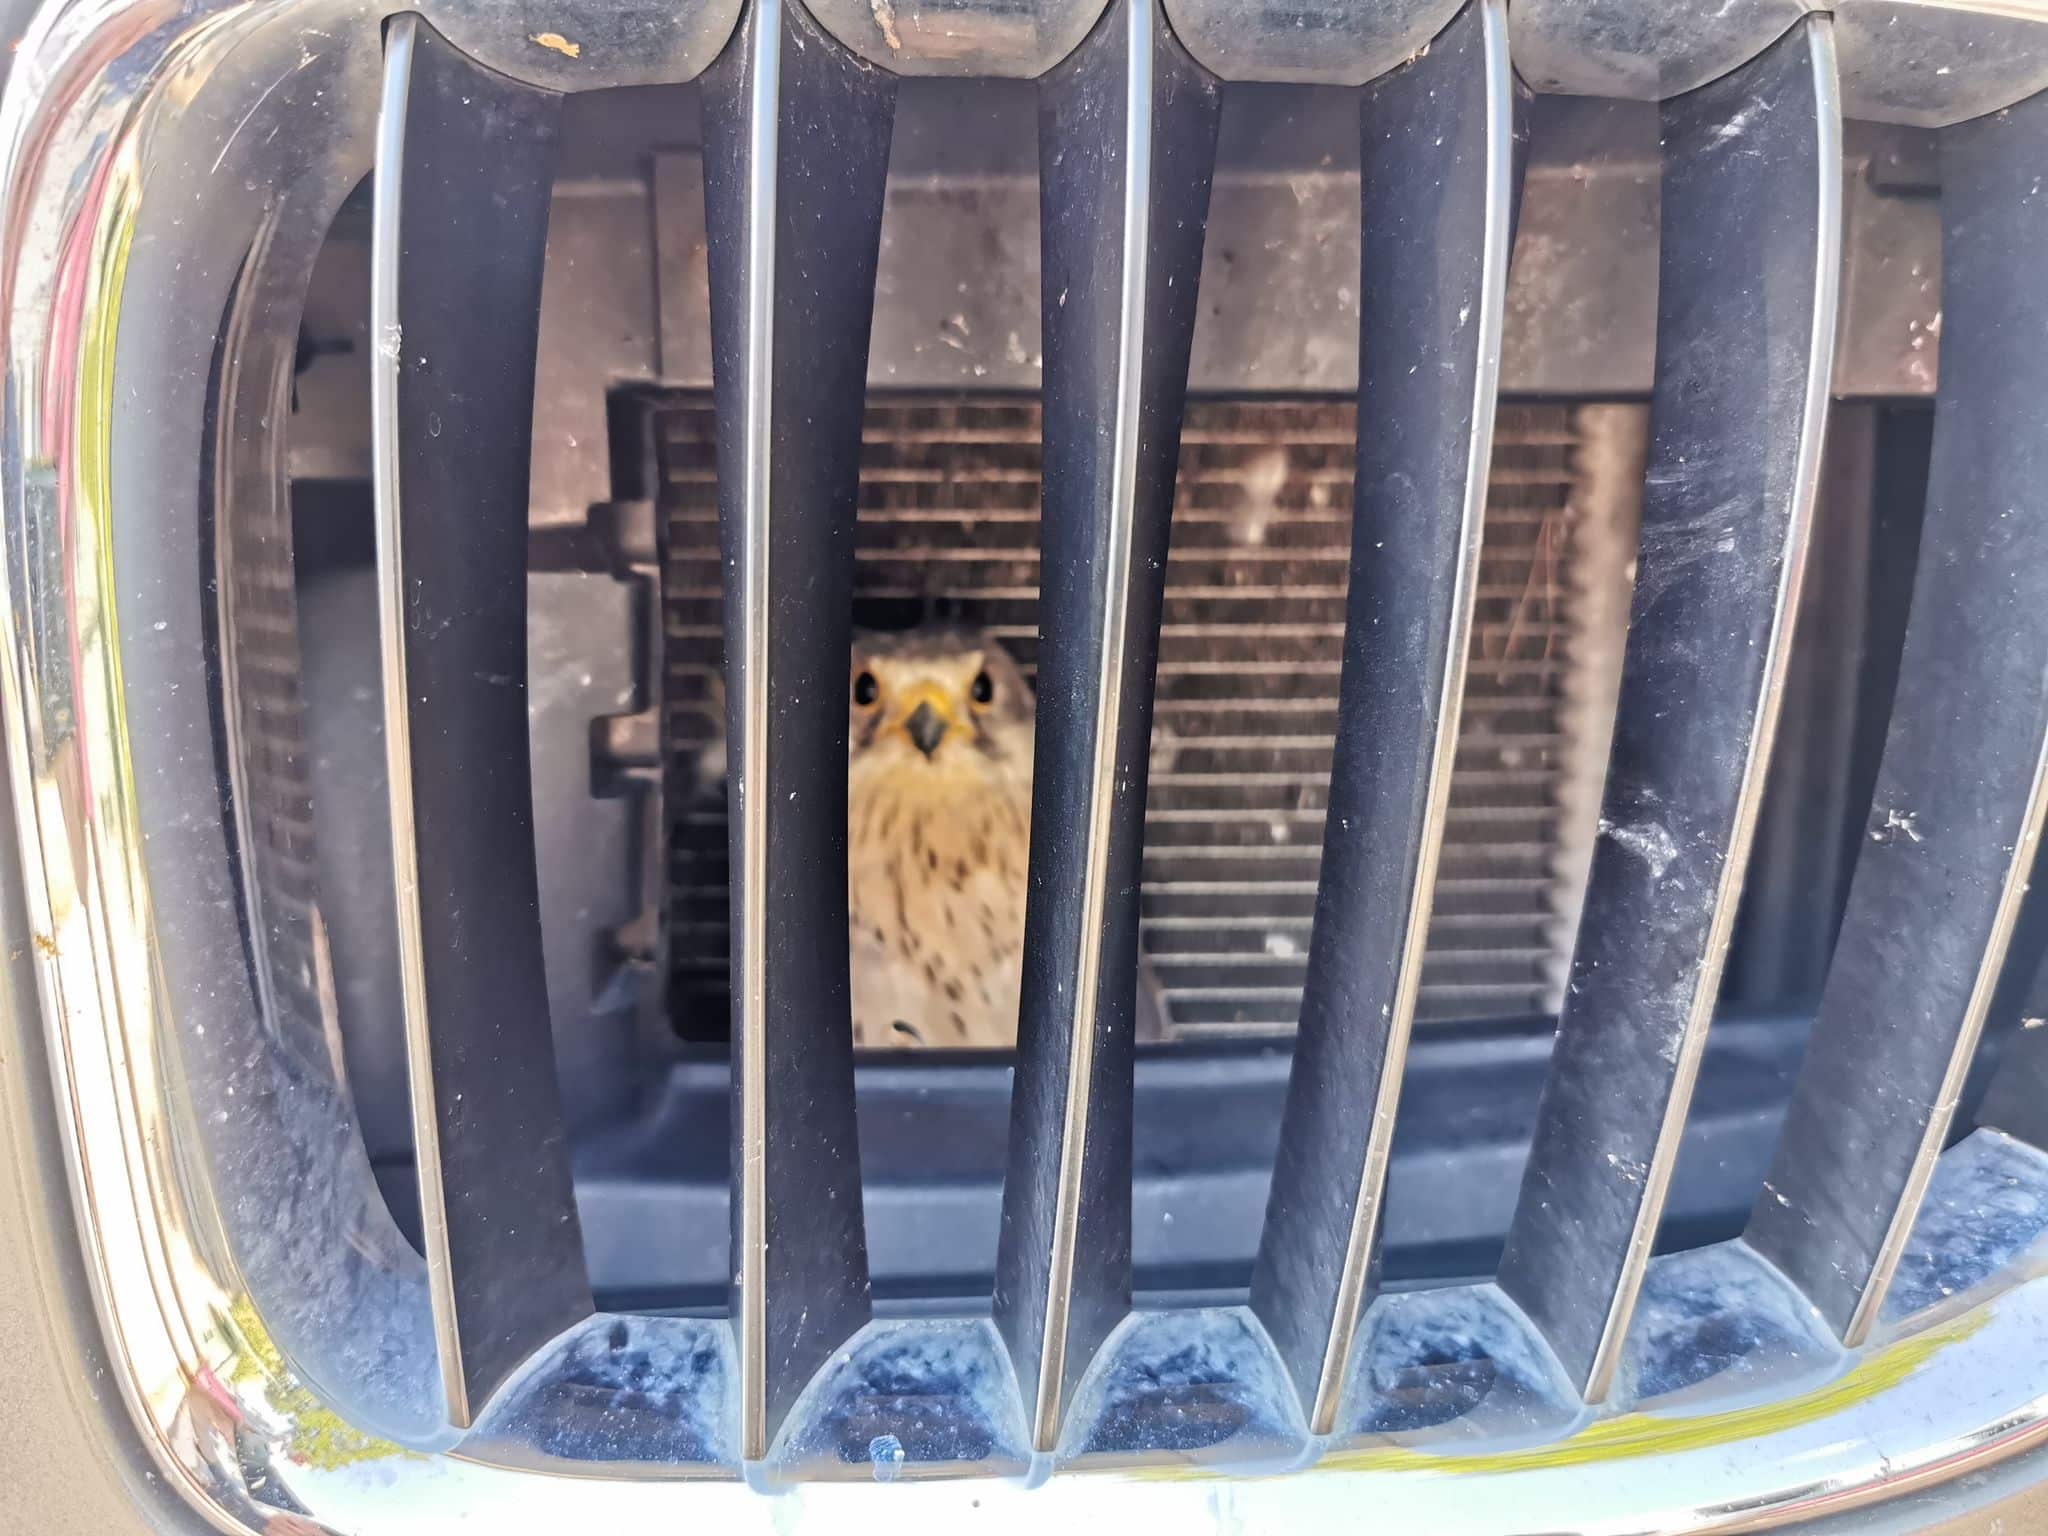 Falke überlebt Unfall mit Auto – hinter dem Kühlergrill